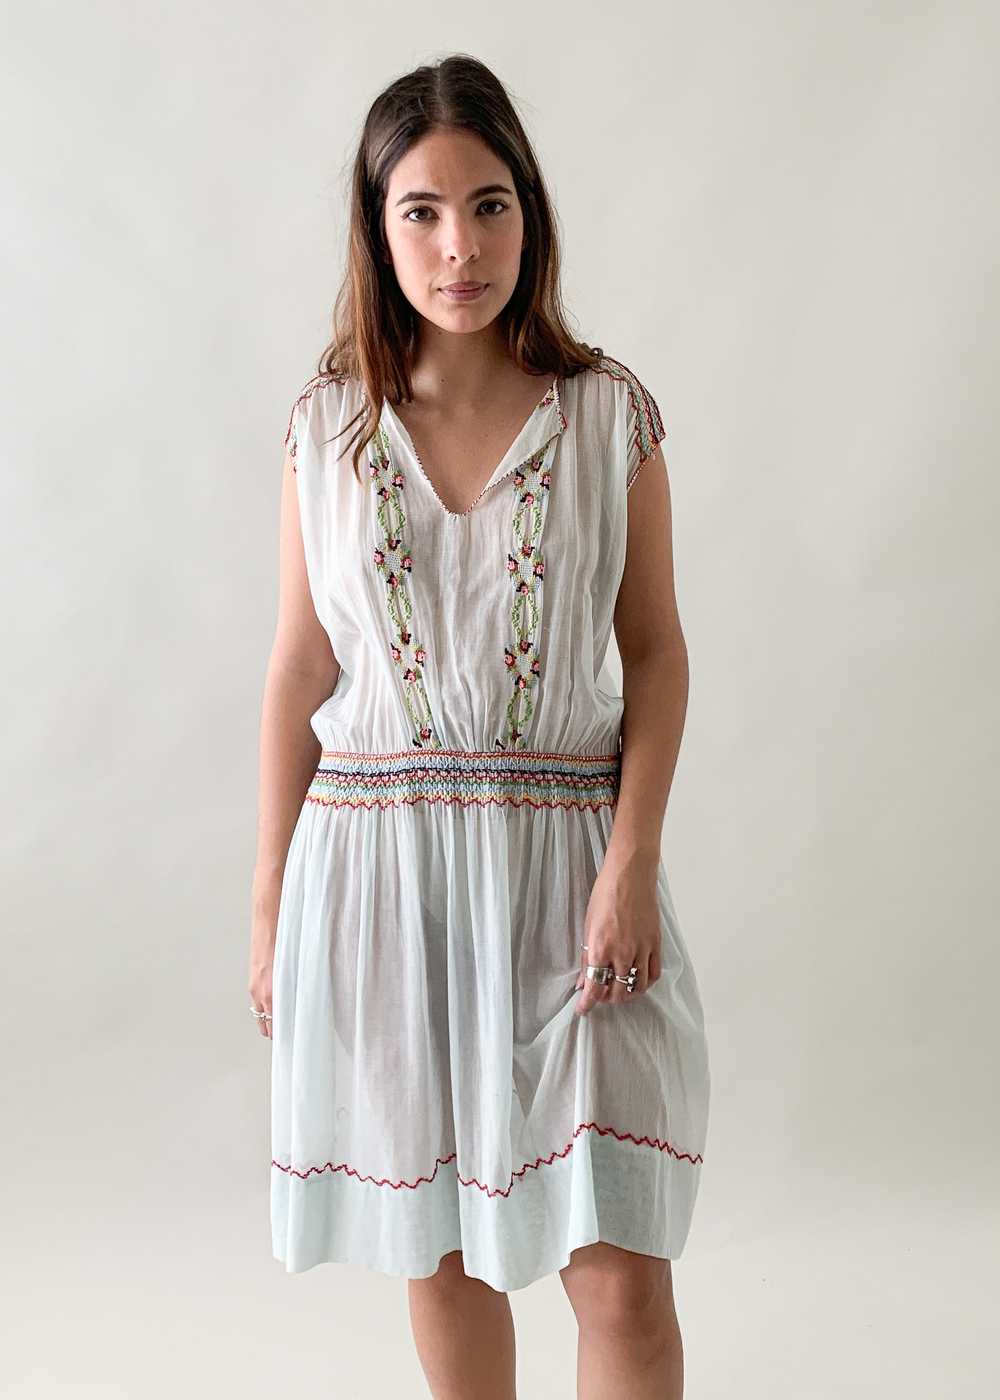 Vintage 1920s Embroidered Cotton Dress - image 1